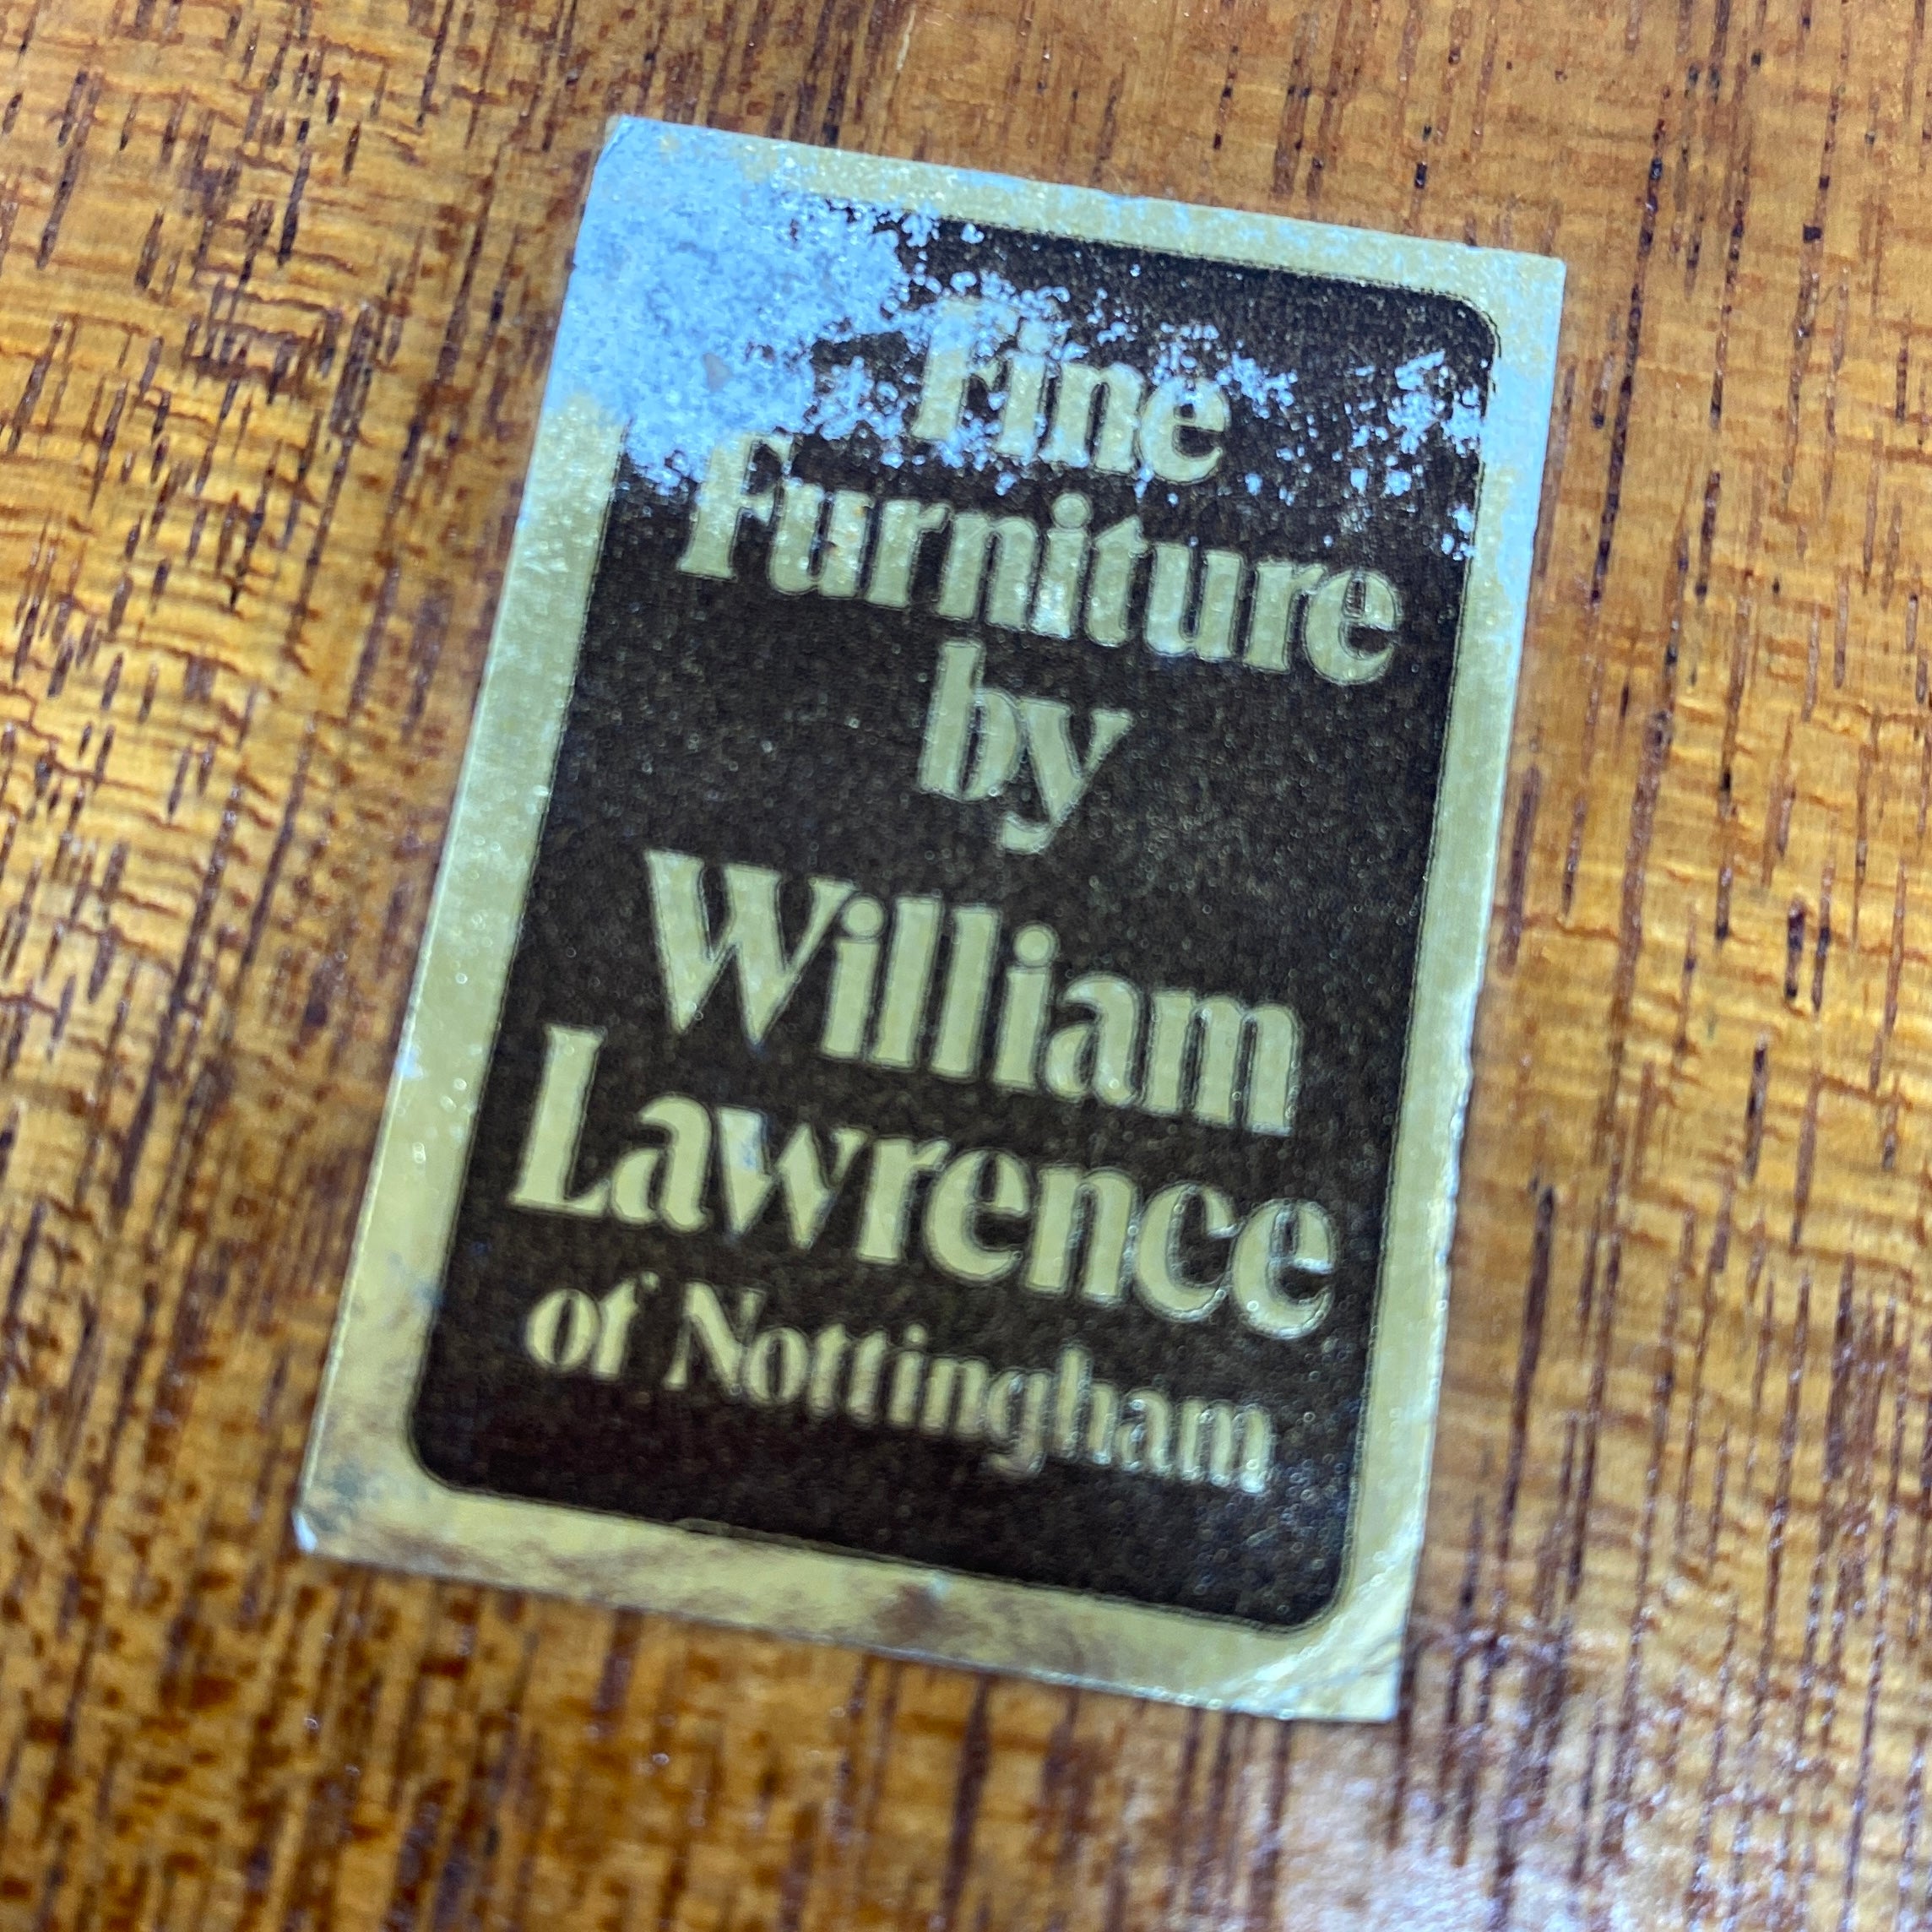 William Lawrence Of Nottingham